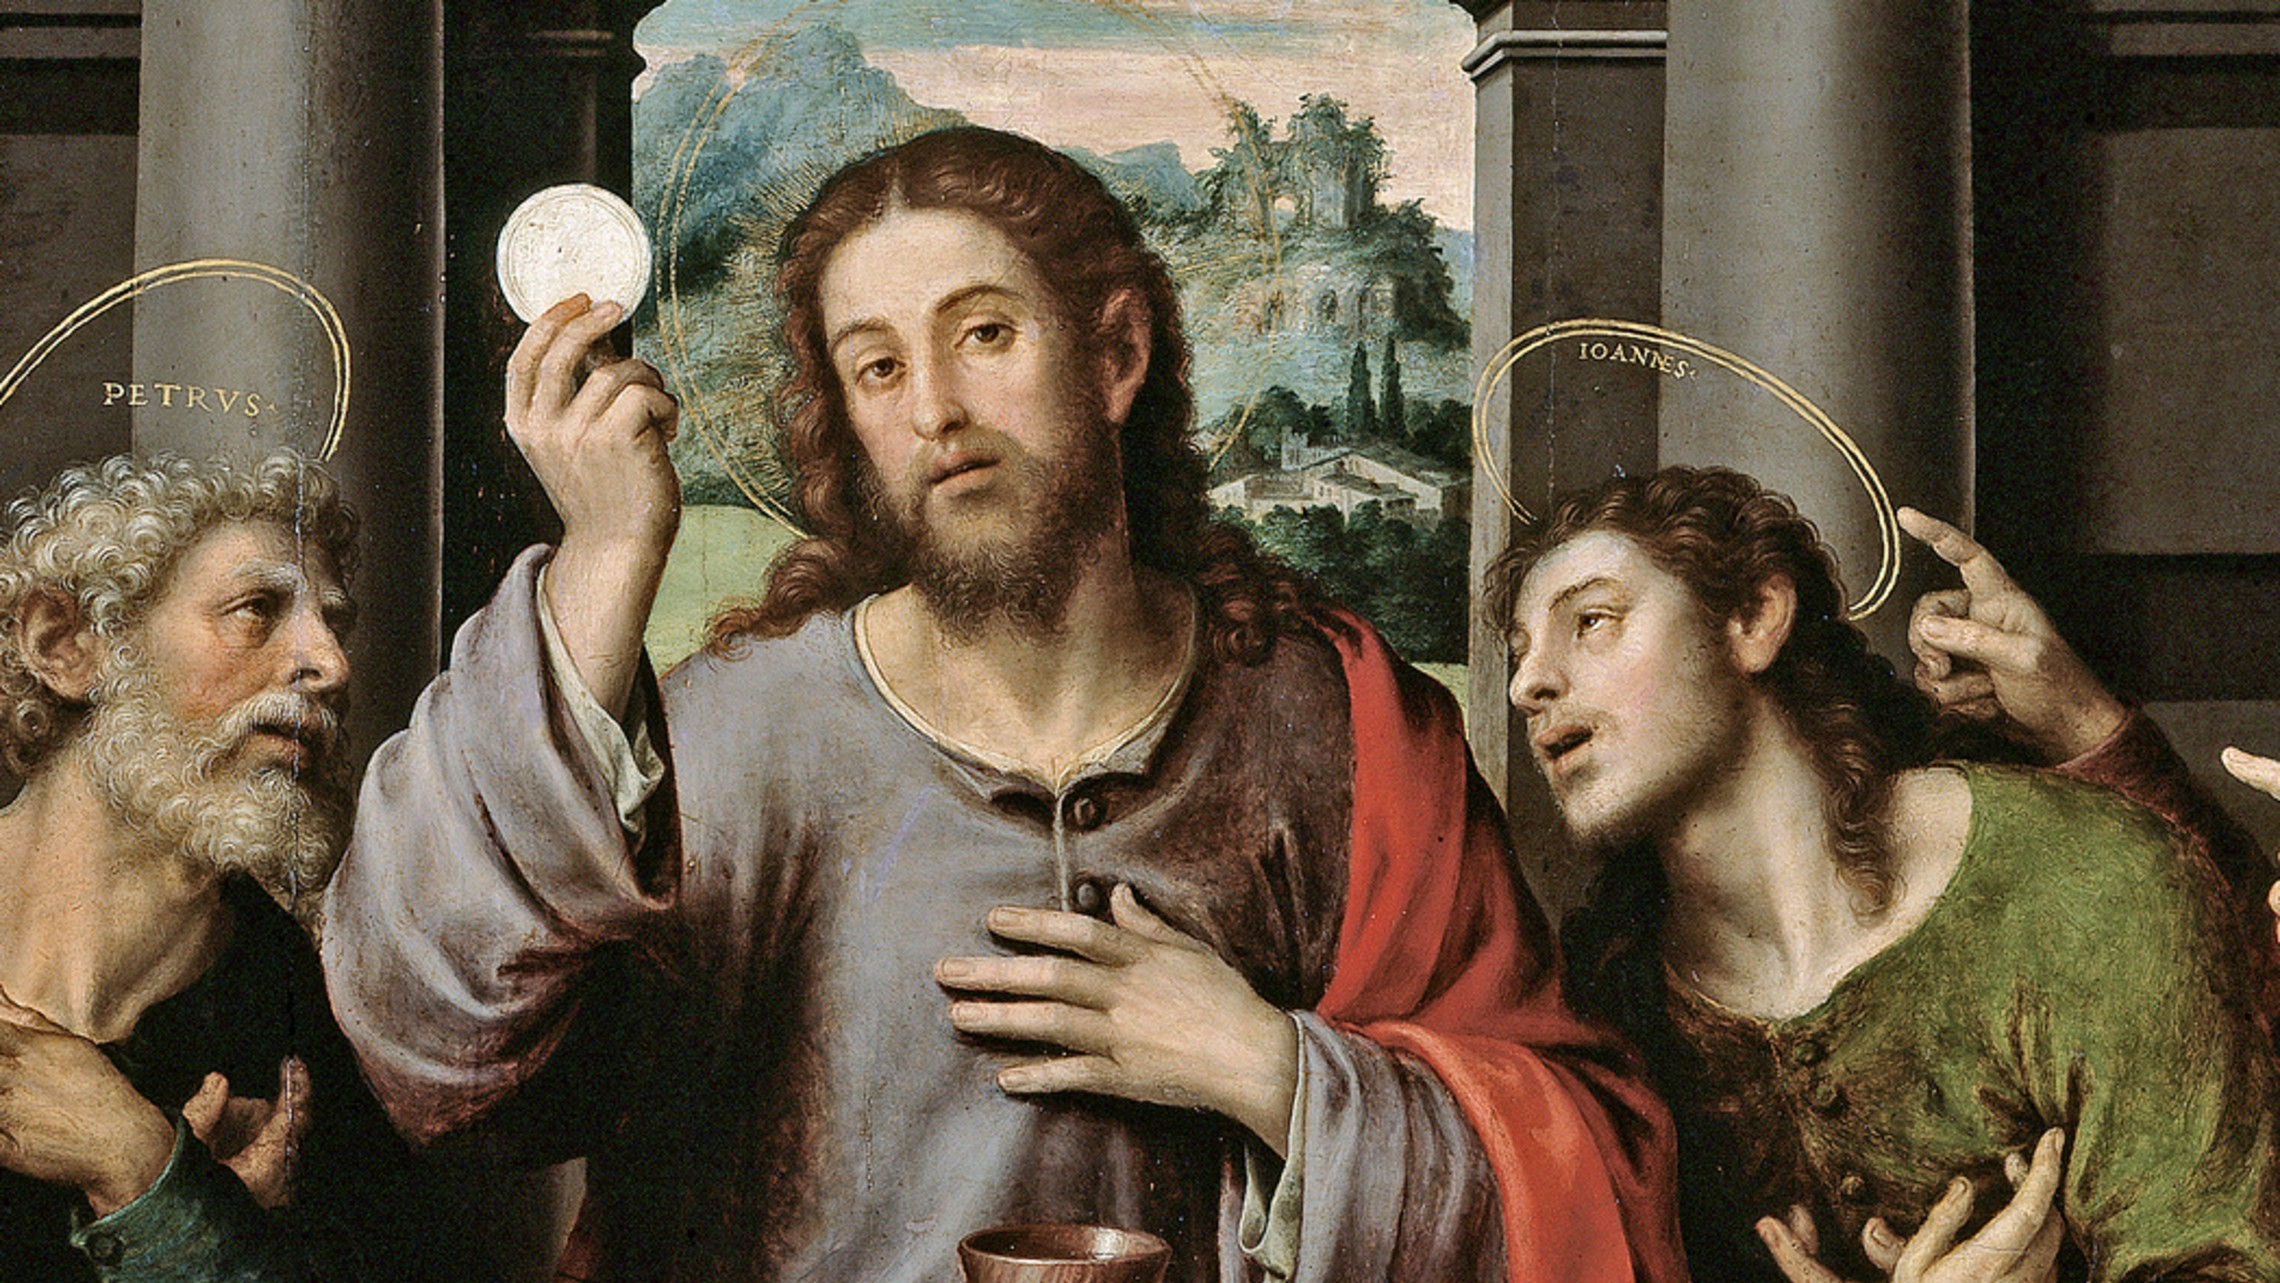 Jesus and the Eucharist